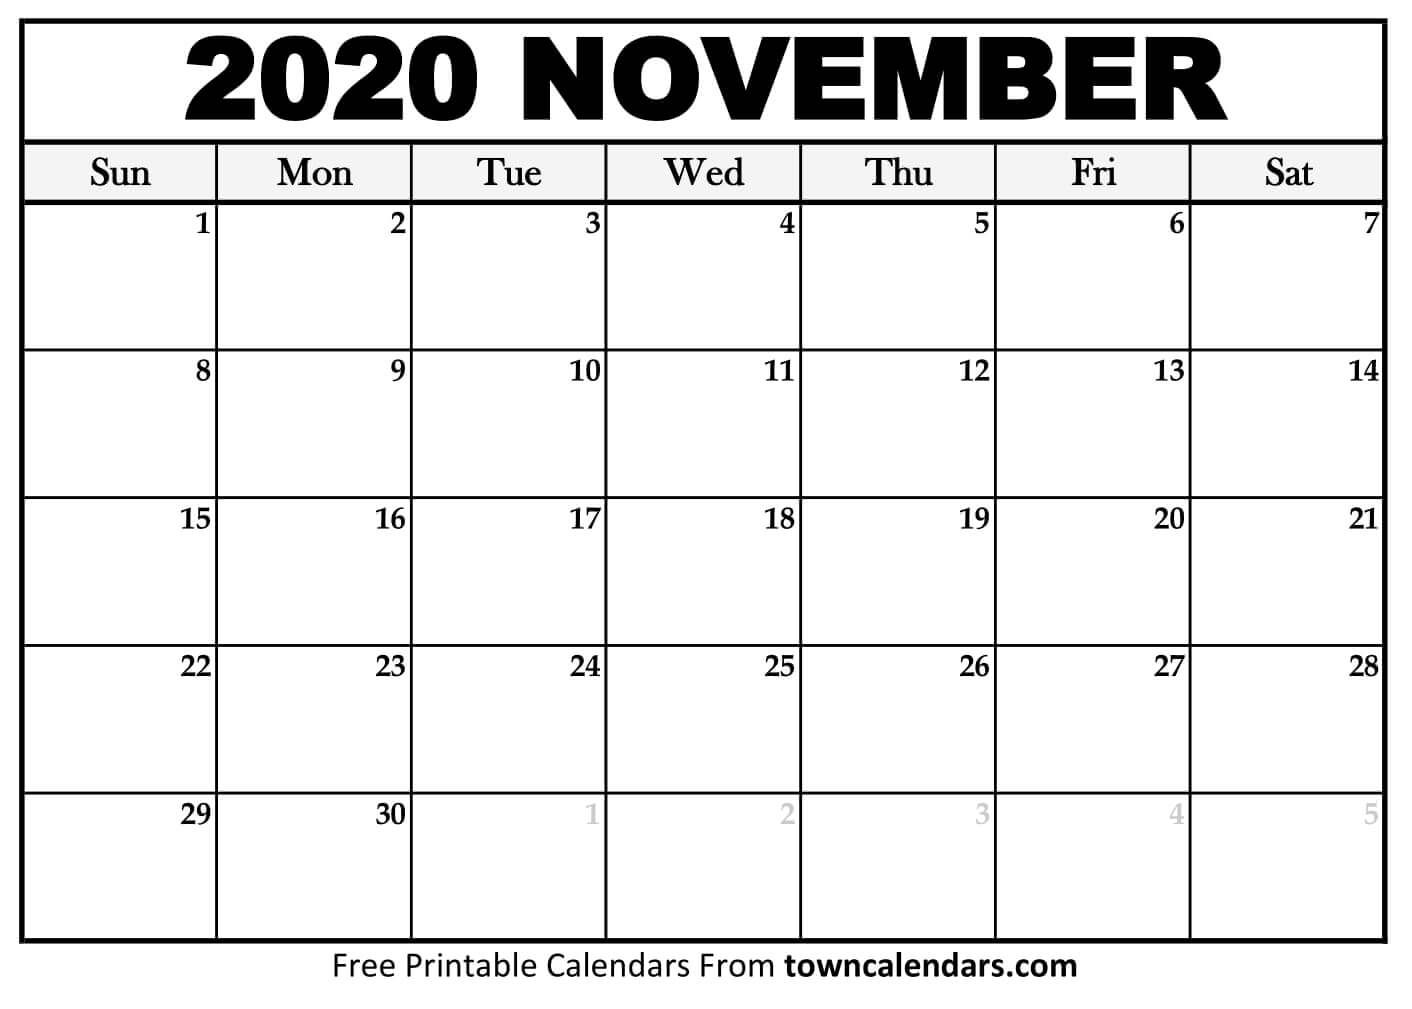 2020 Calendar Printable Towncalendars